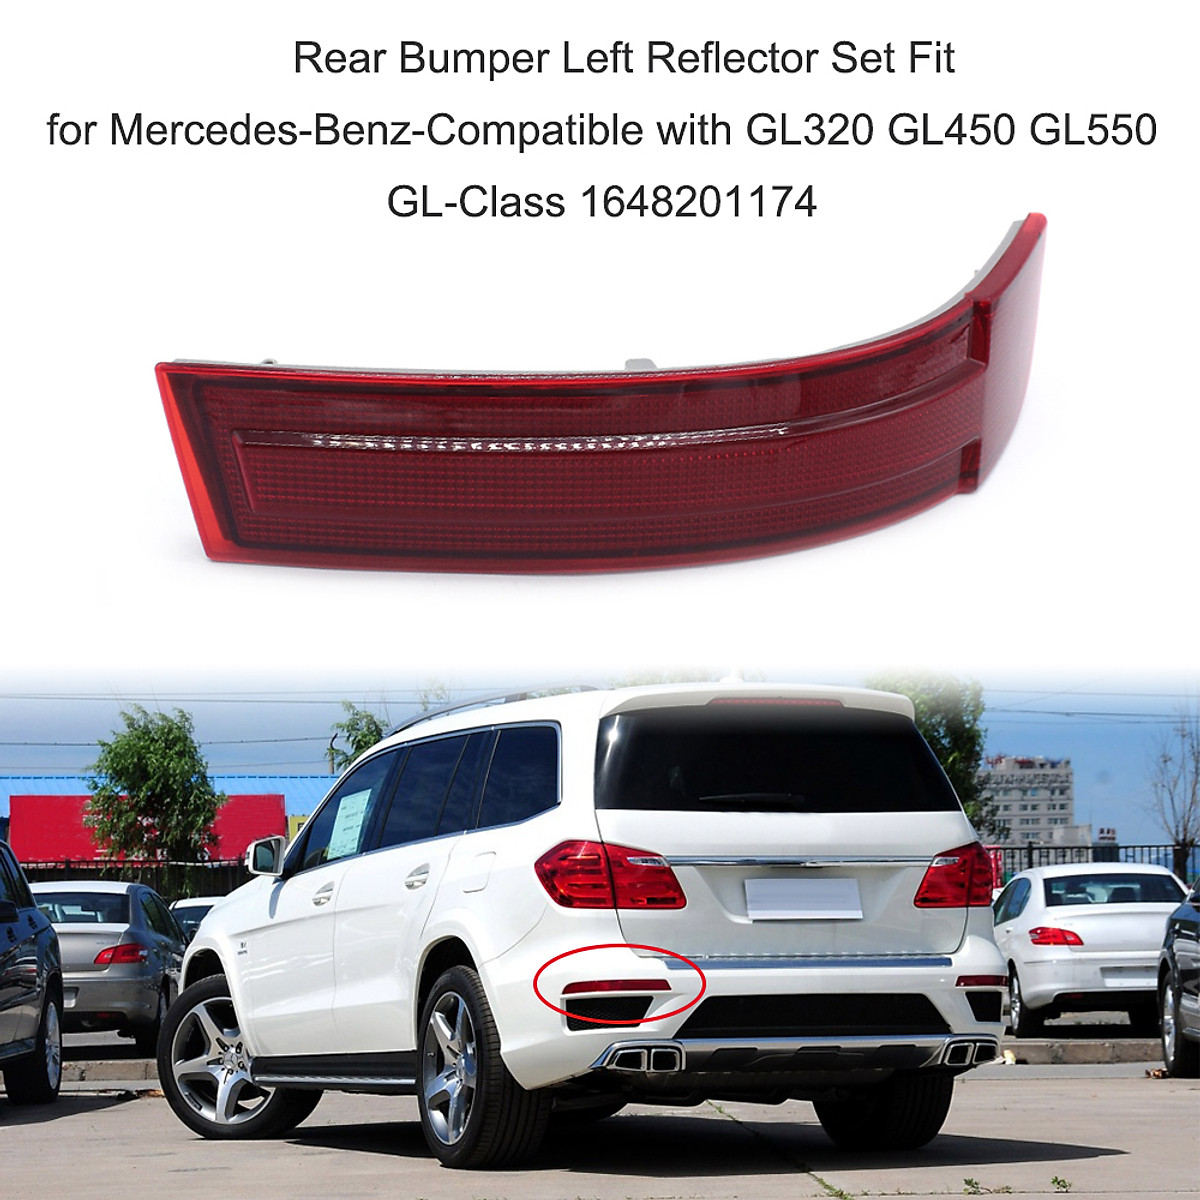 Mua Rear Bumper Left Reflector Set Fit for Mercedes-Benz-Compatible with GL320  GL450 GL550 GL-Class 1648201174